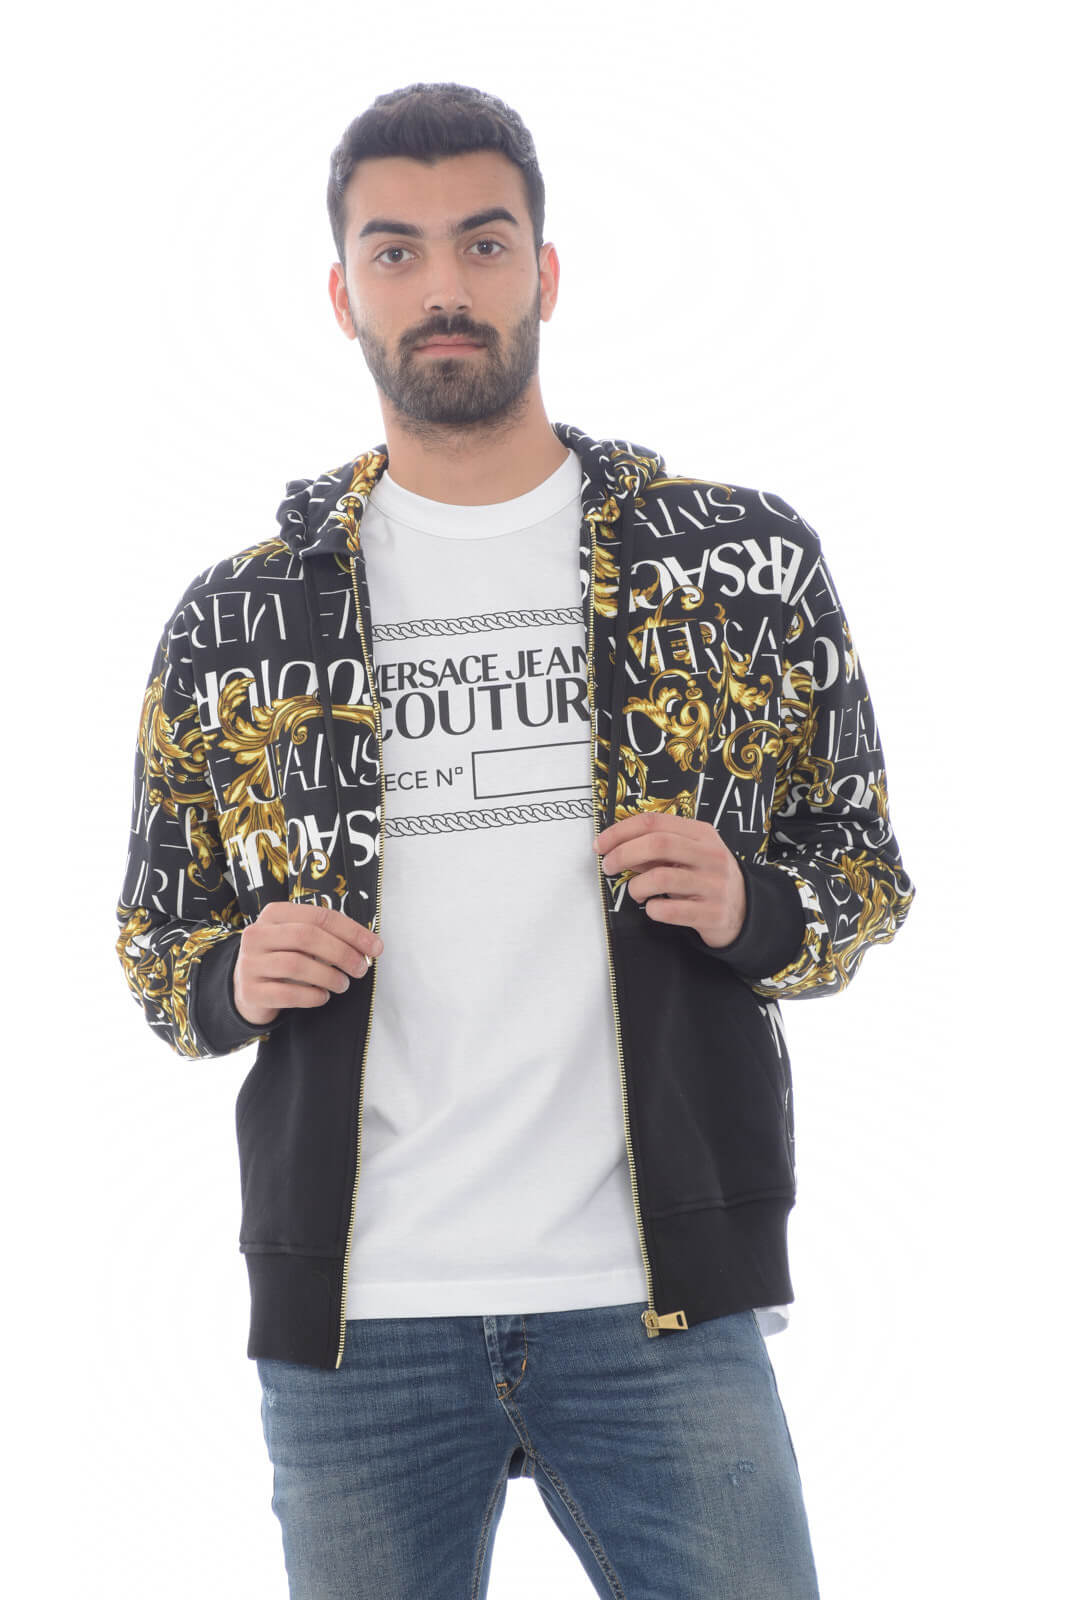 Versace Jeans Couture men's sweatshirt with Garland print logo